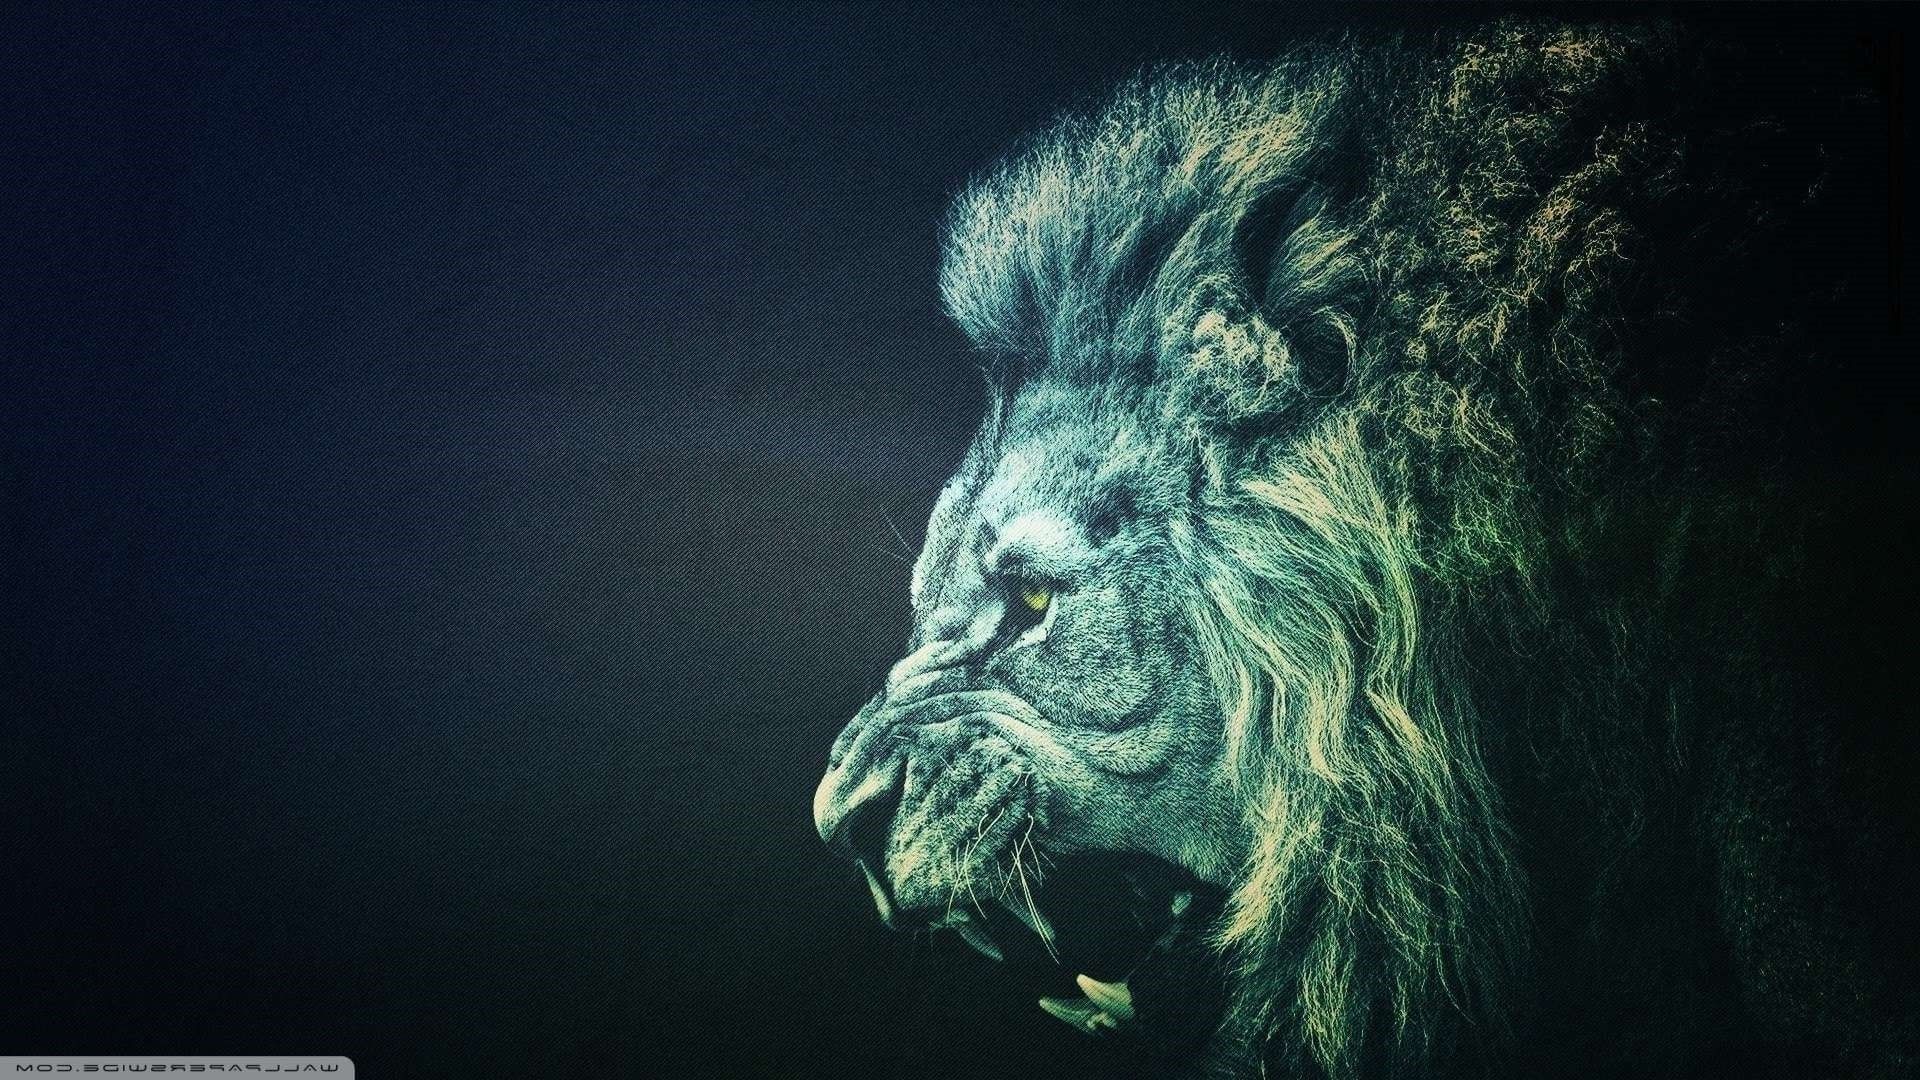 roaring lion wallpaper hd 1080p iphone